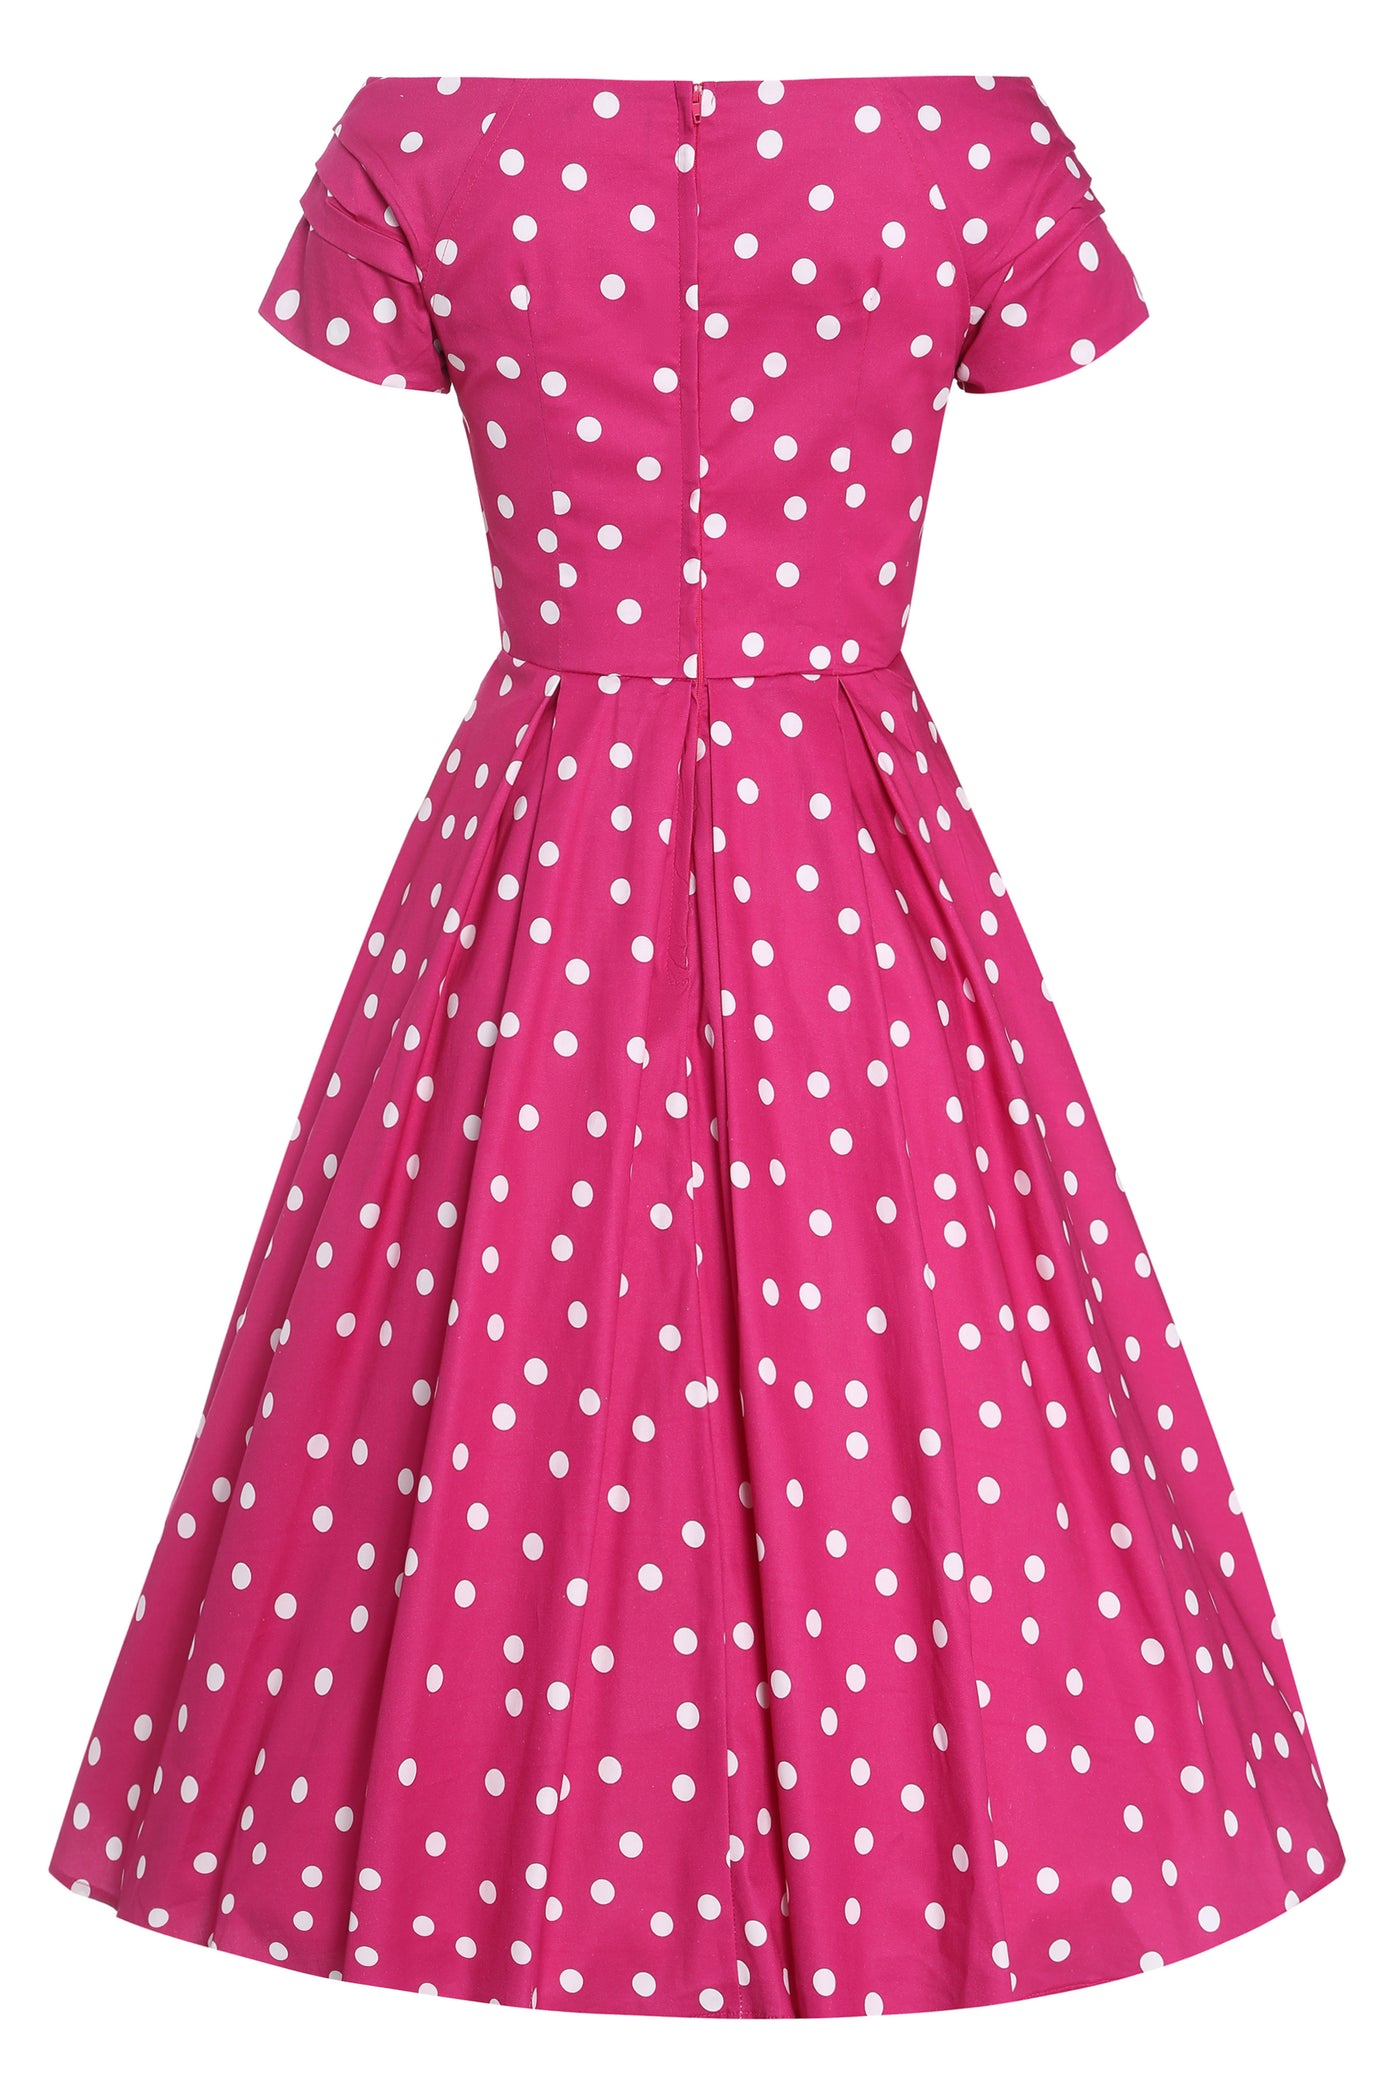 Back view of Off-Shoulder Polka Dot Evening Dress in Hot Pink/White